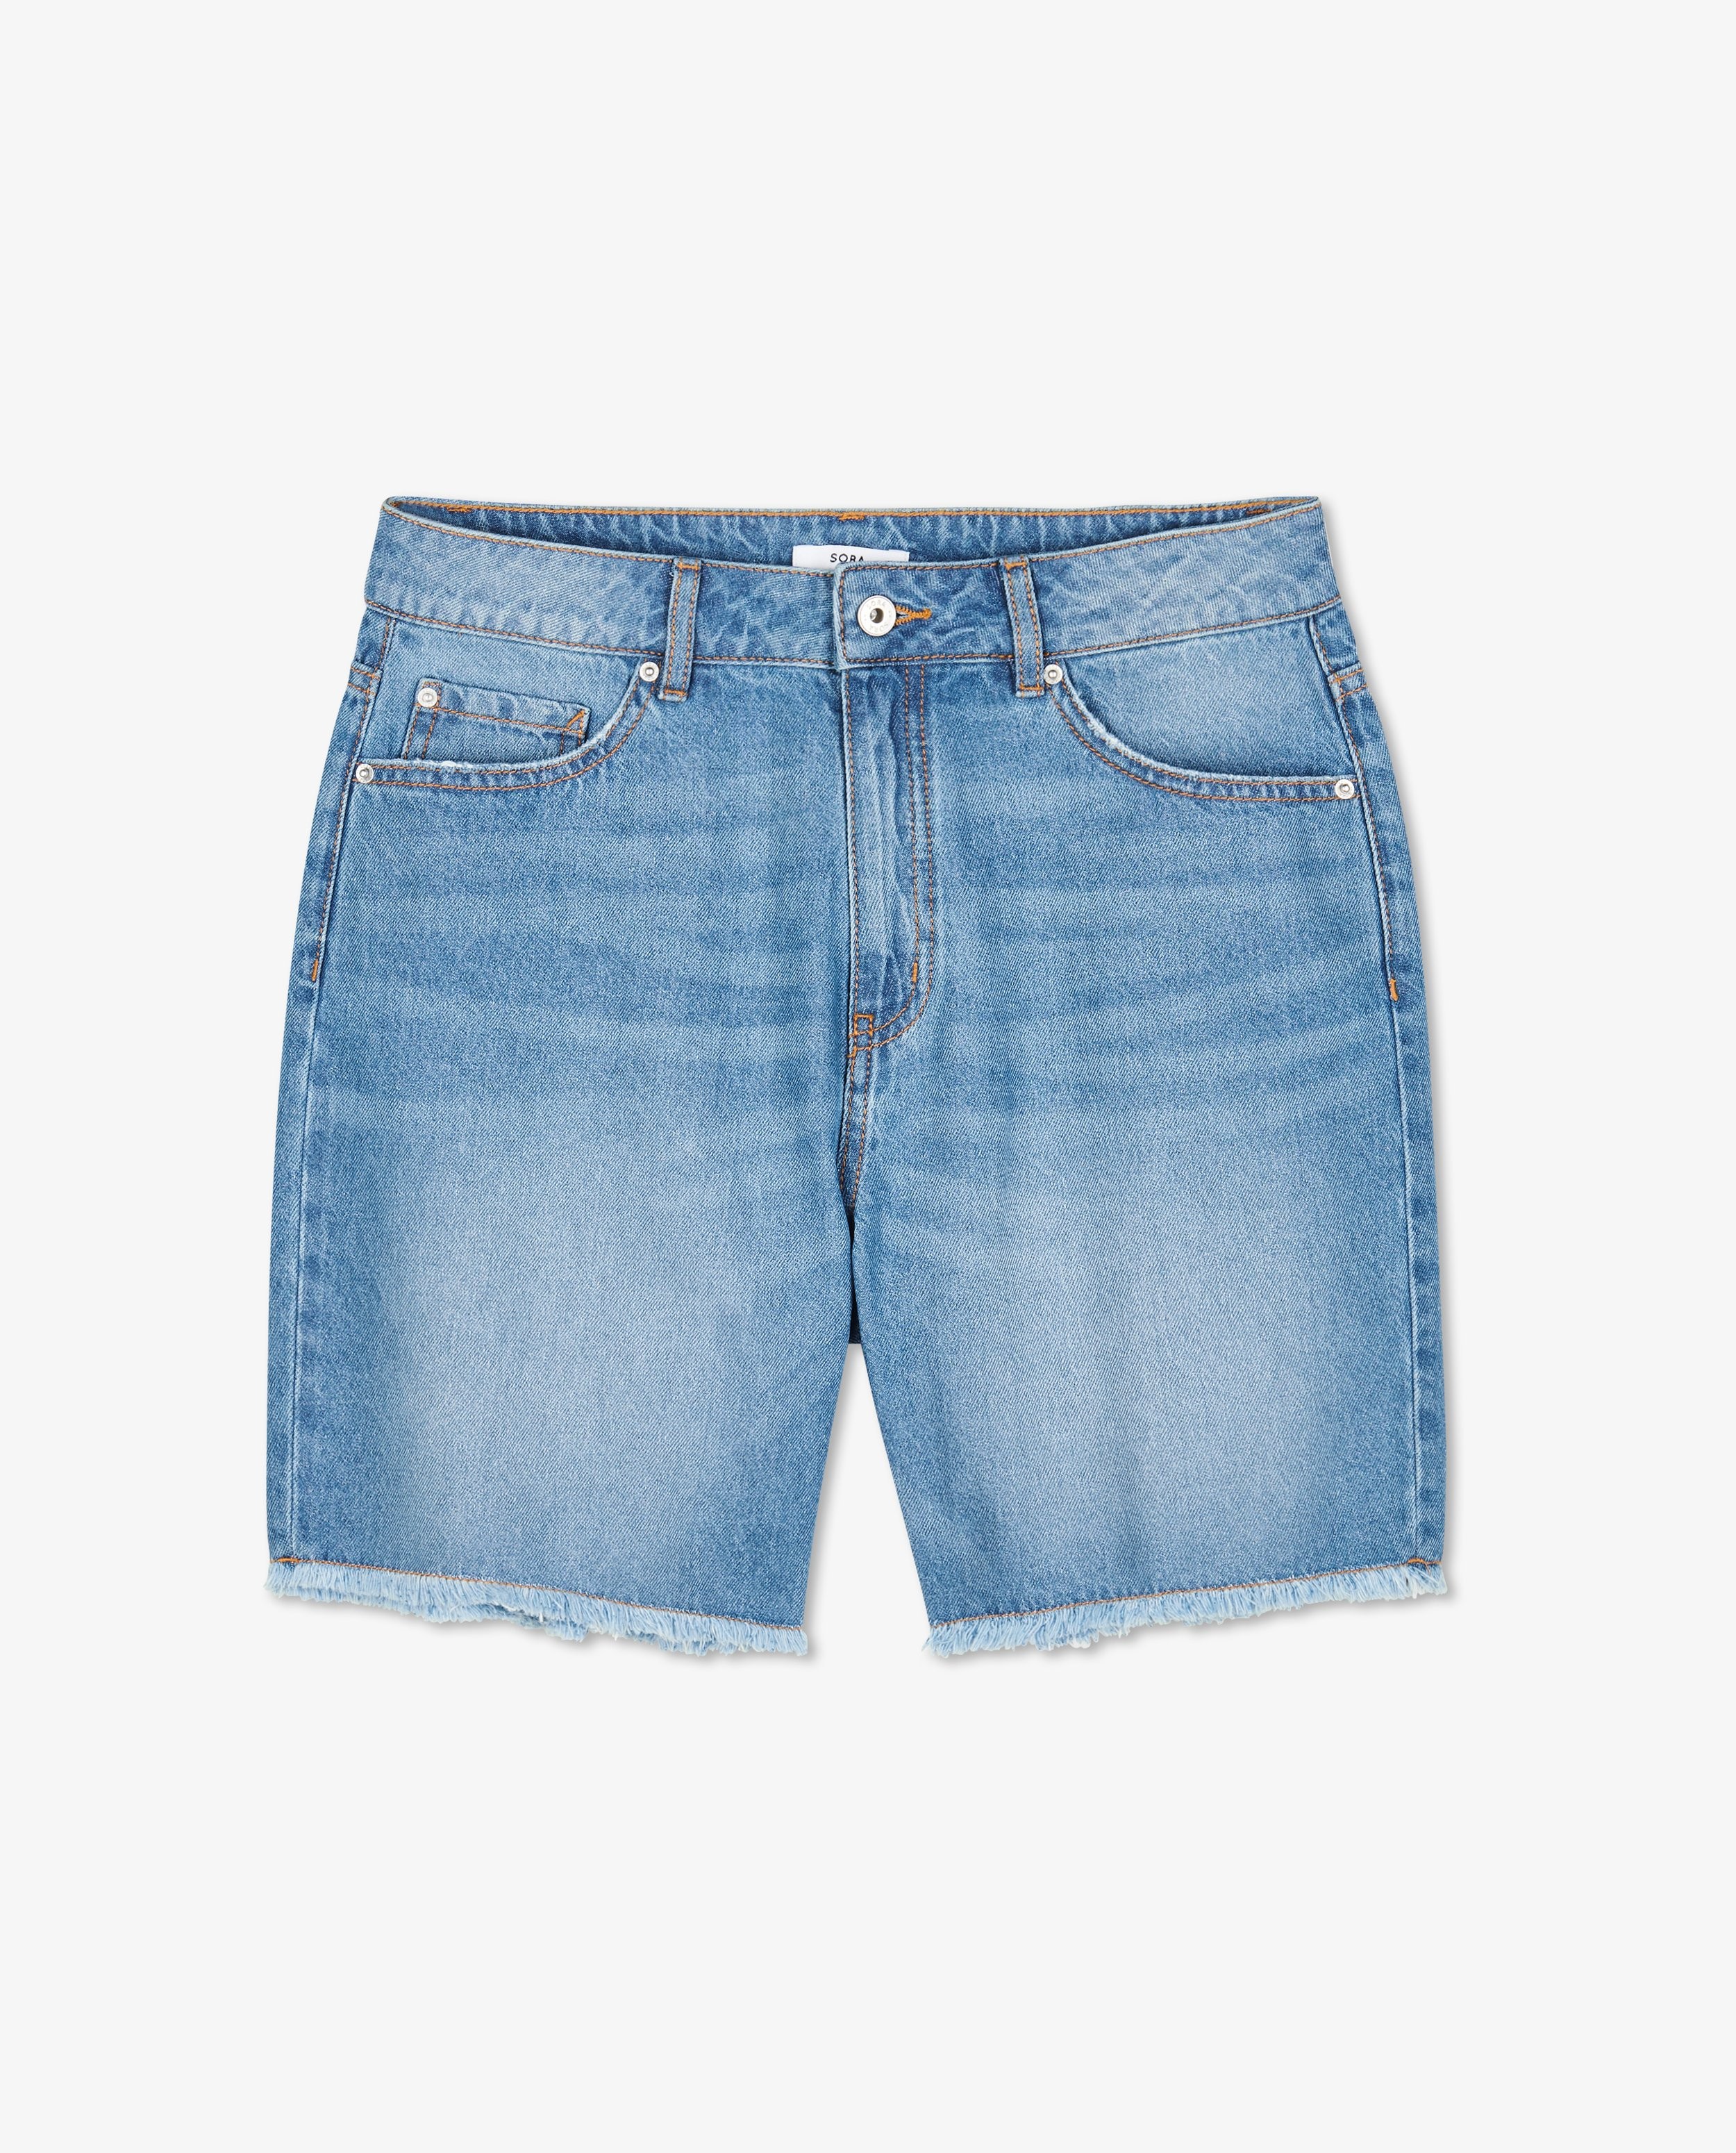 Shorts - Short en jeans bleu avec des effilochures